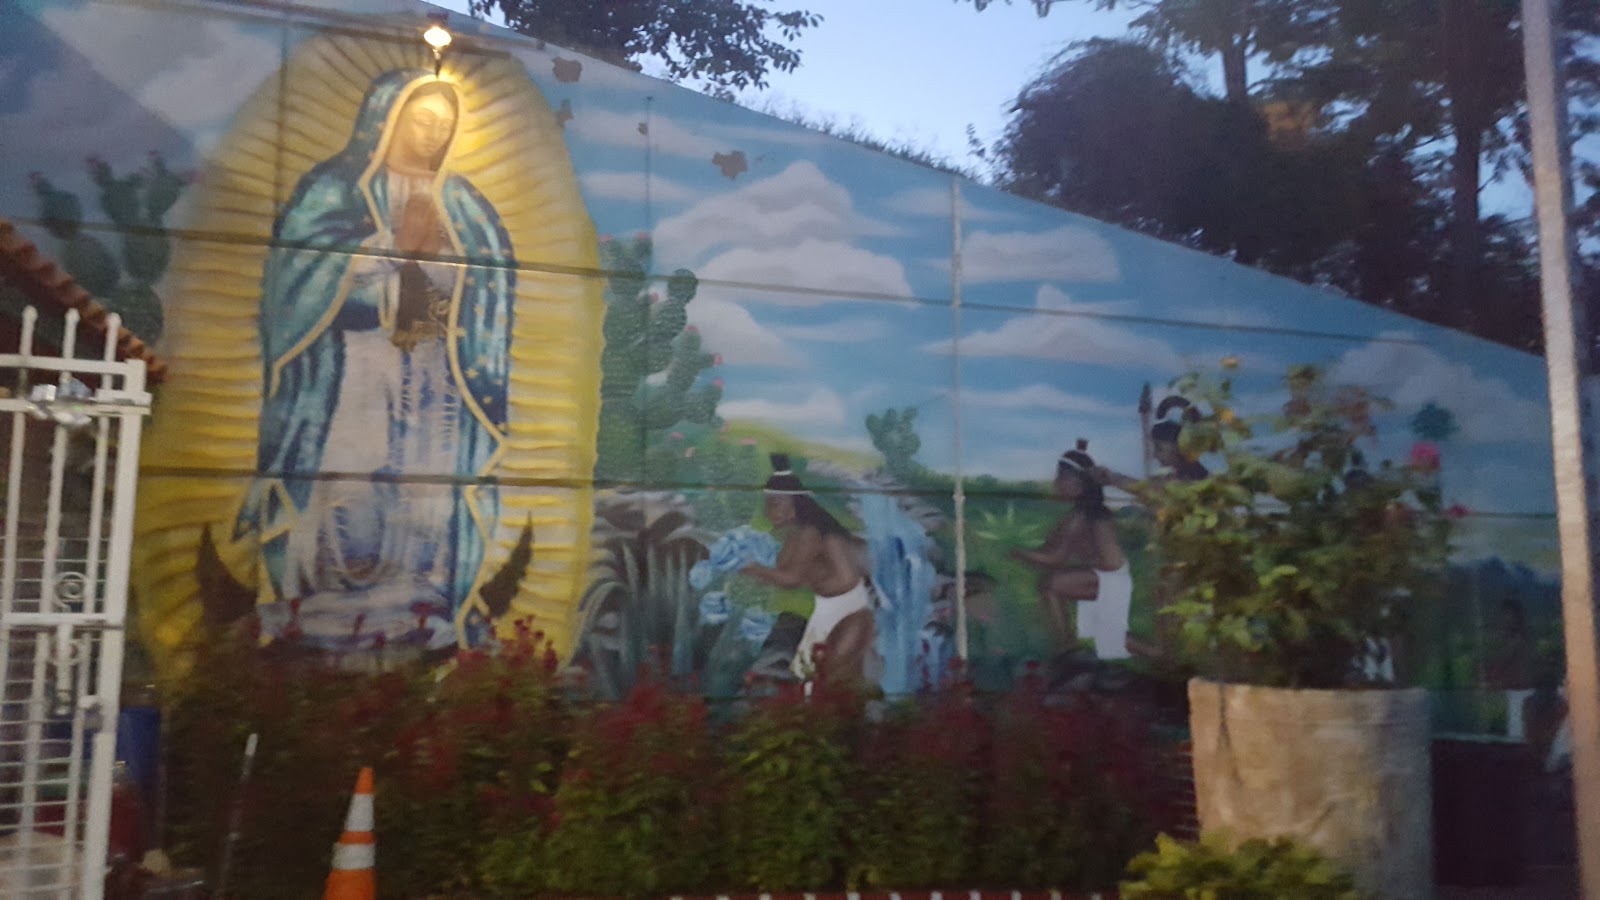 Photo of Capilla De La Virgen De Guadalupe, Passaic NJ in Passaic City, New Jersey, United States - 5 Picture of Point of interest, Establishment, Place of worship